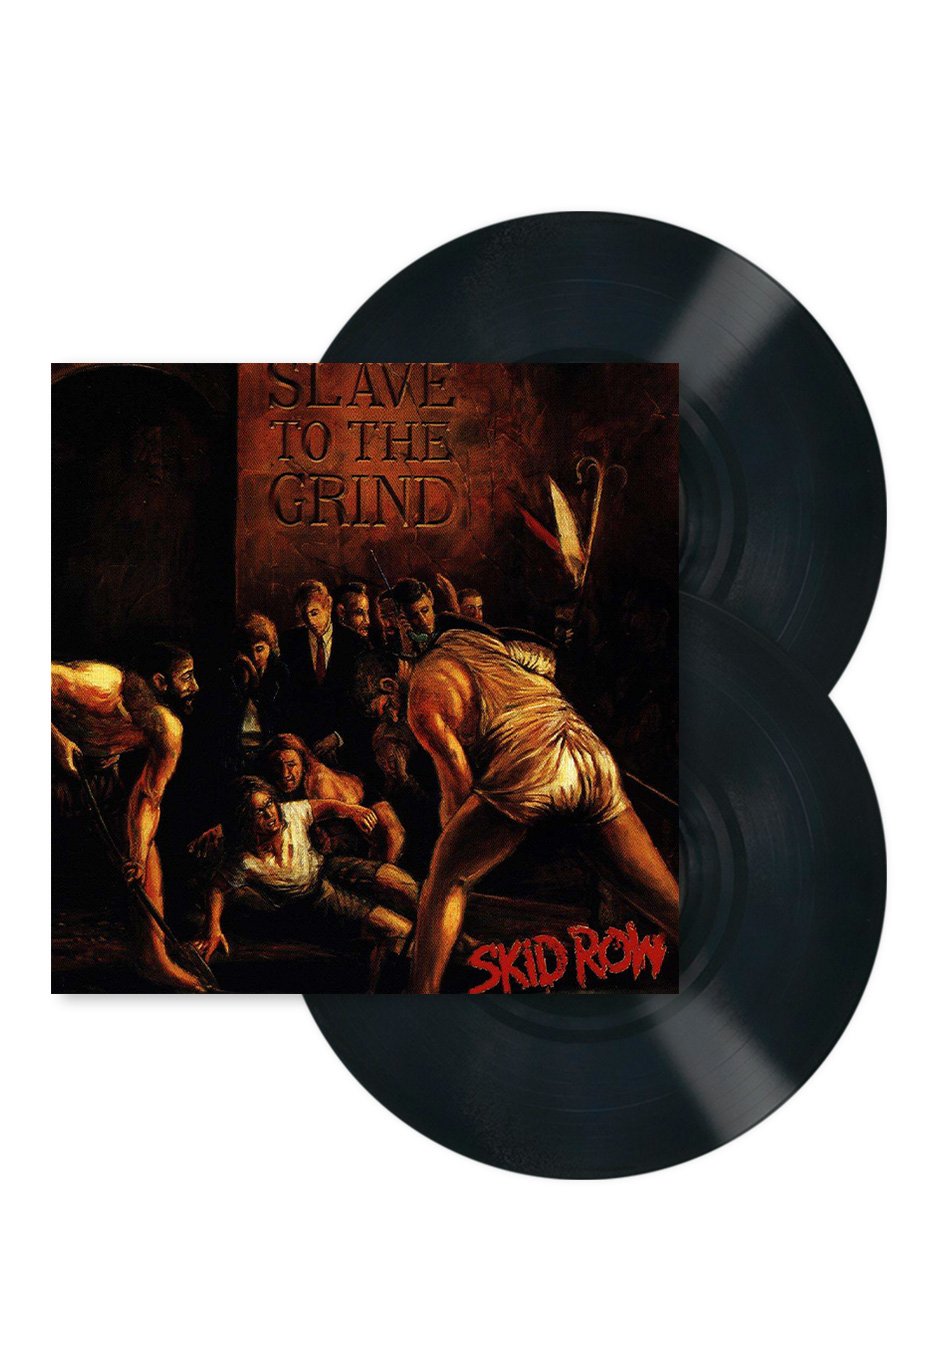 Skid Row - Slave To The Grind - 2 Vinyl